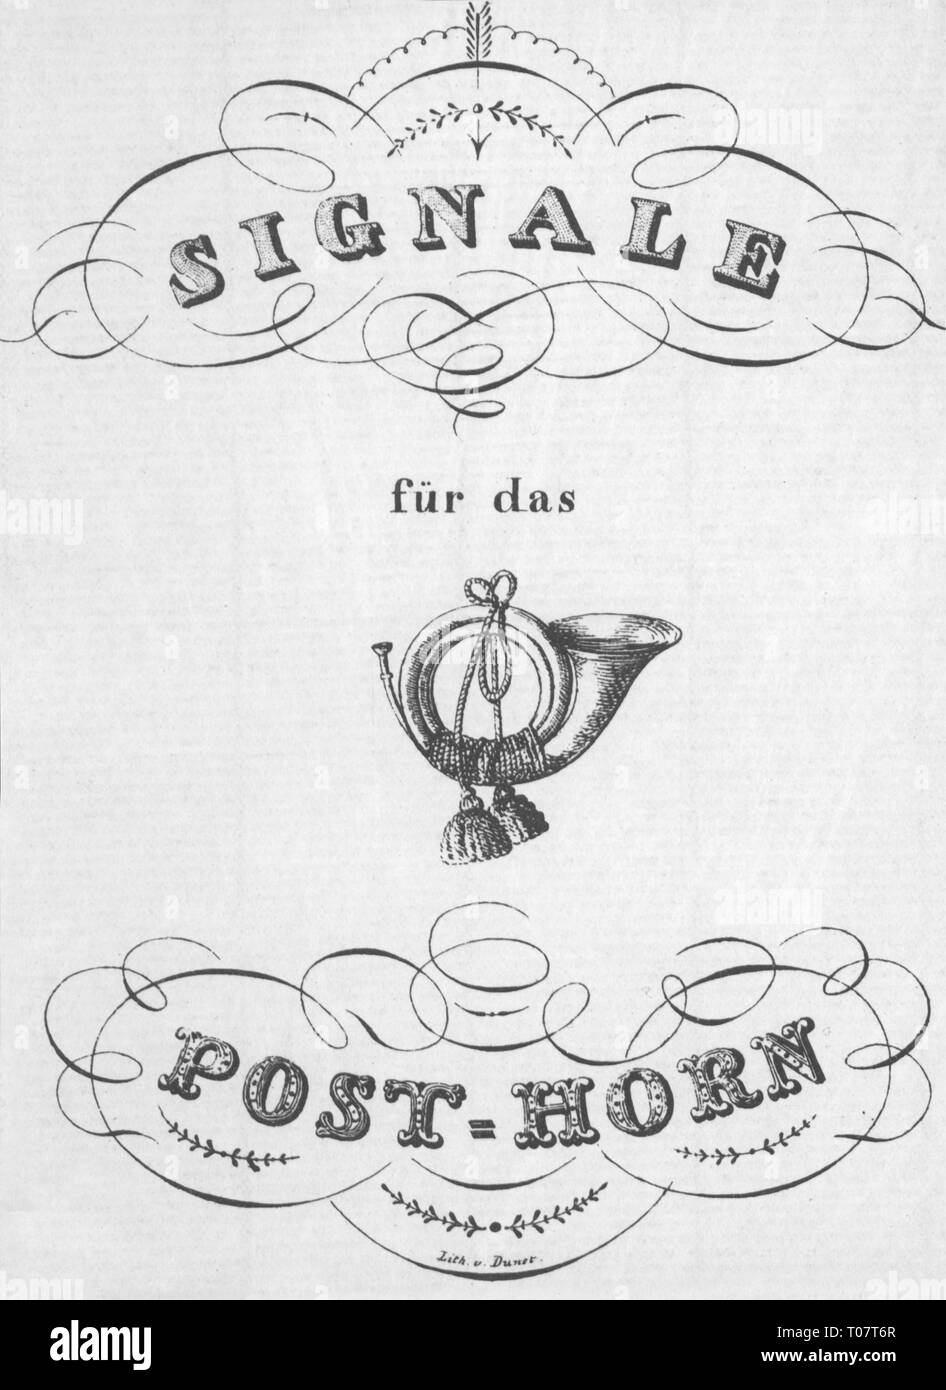 Mail, Post Hörner, Signale für das posthorn der Thurn und Taxis Post, Titelseite, Lithographie, Deutschland, 1833, Additional-Rights - Clearance-Info - Not-Available Stockfoto